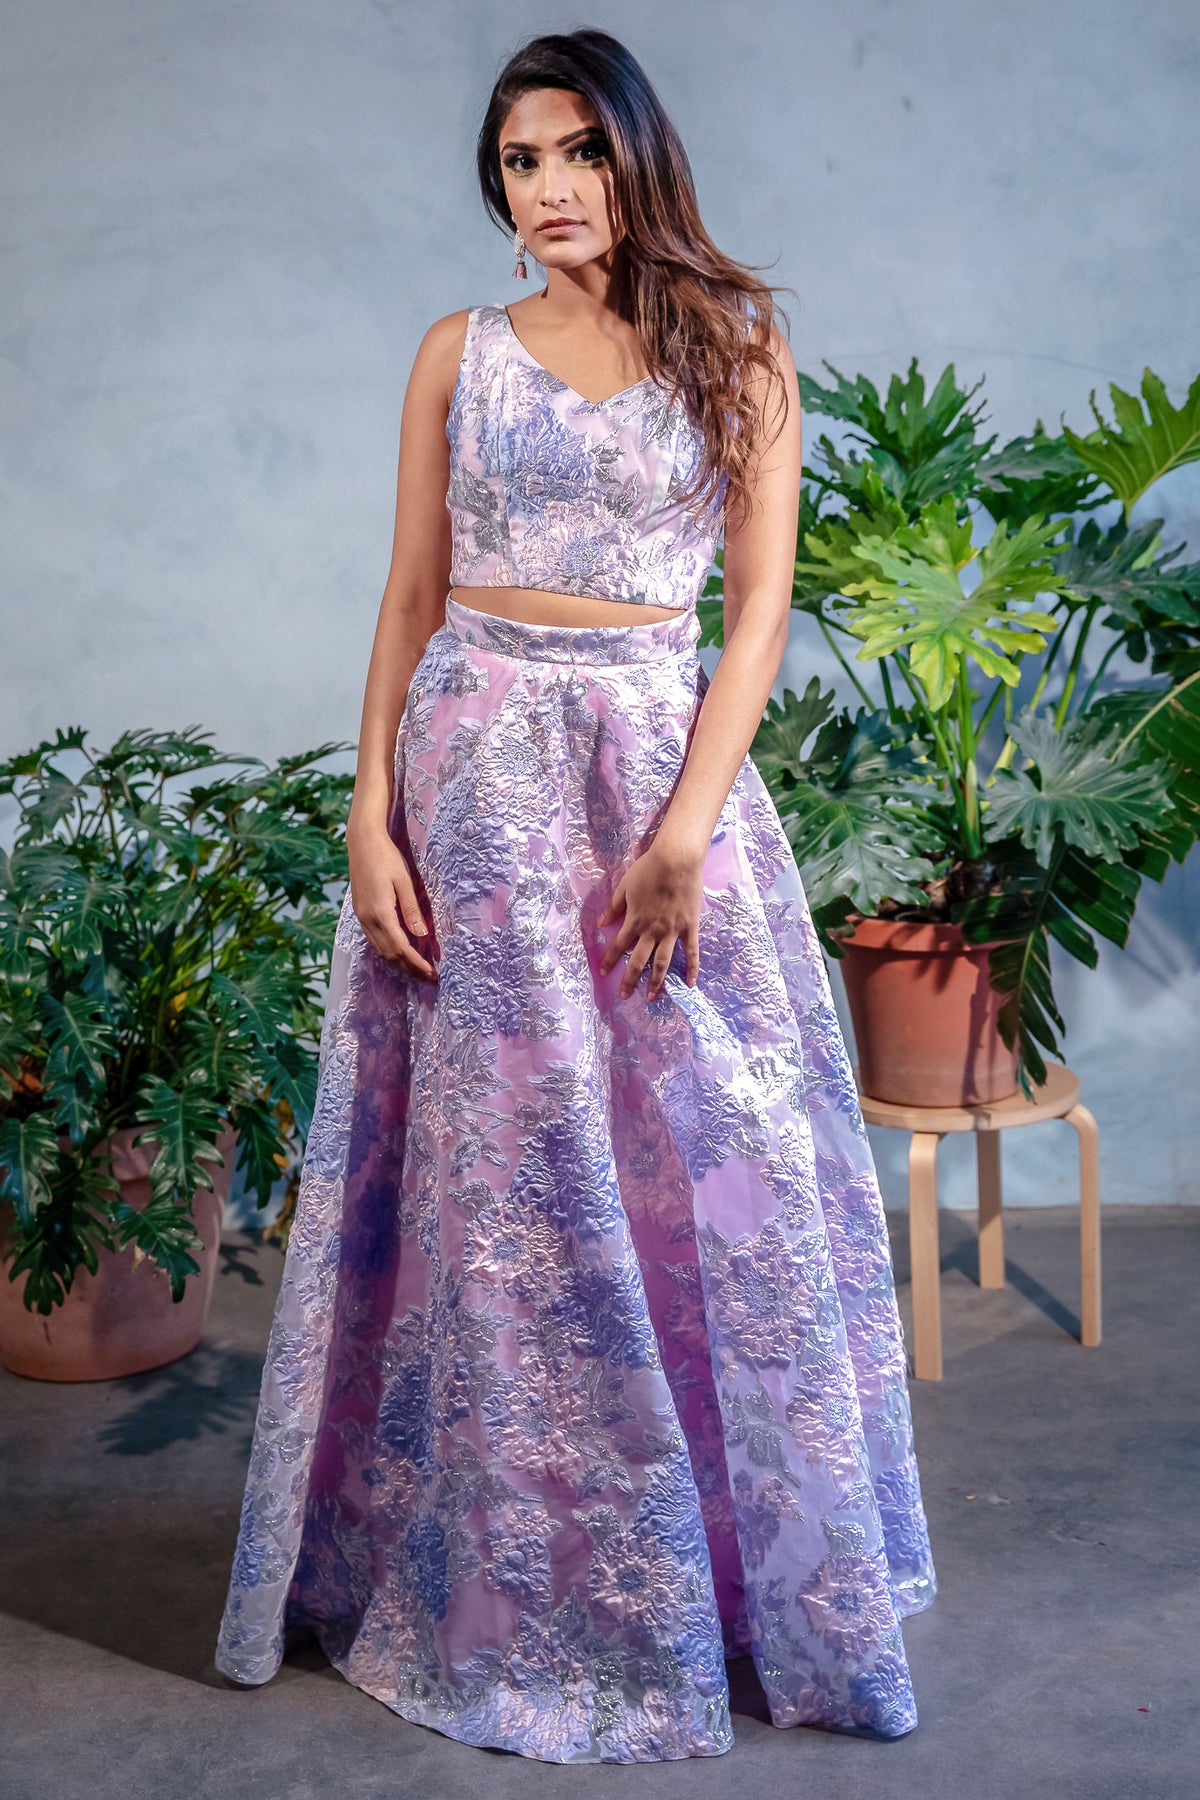 SONIA Lavender Jacquard Top - Front View - Harleen Kaur - South Asian Womenswear